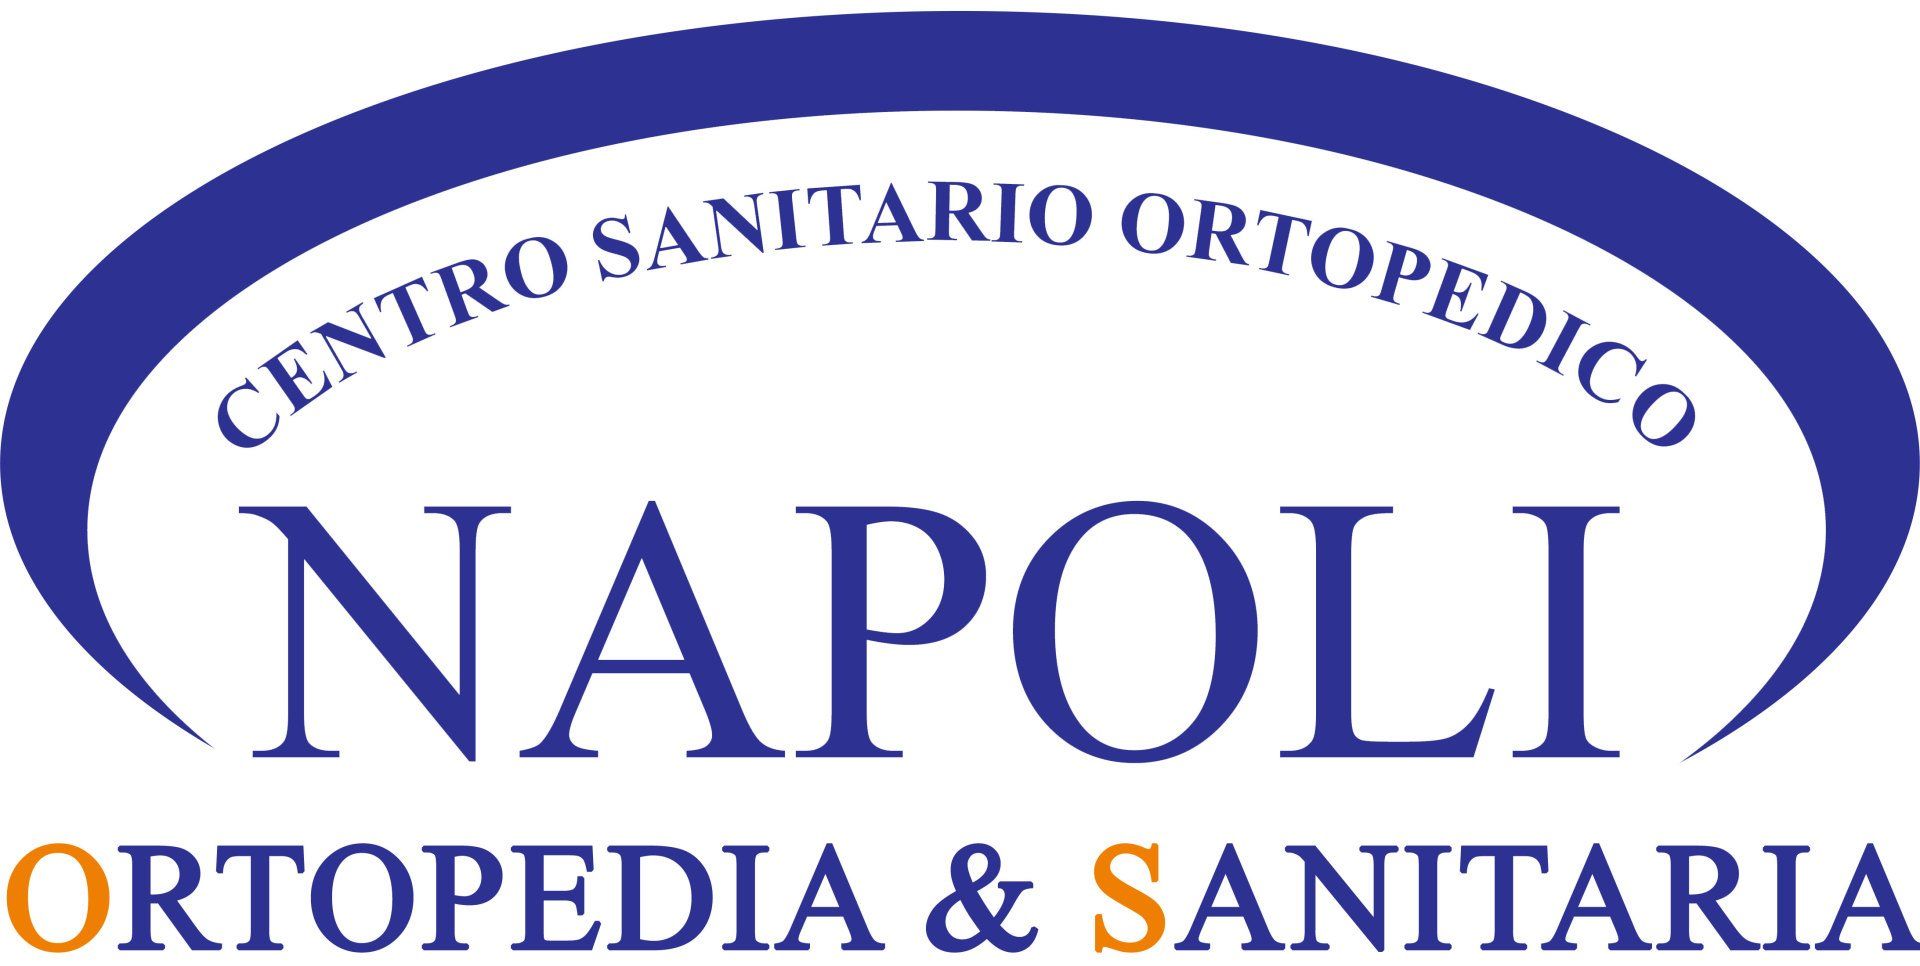 ORTOPEDIA SANITARIA NAPOLI logo